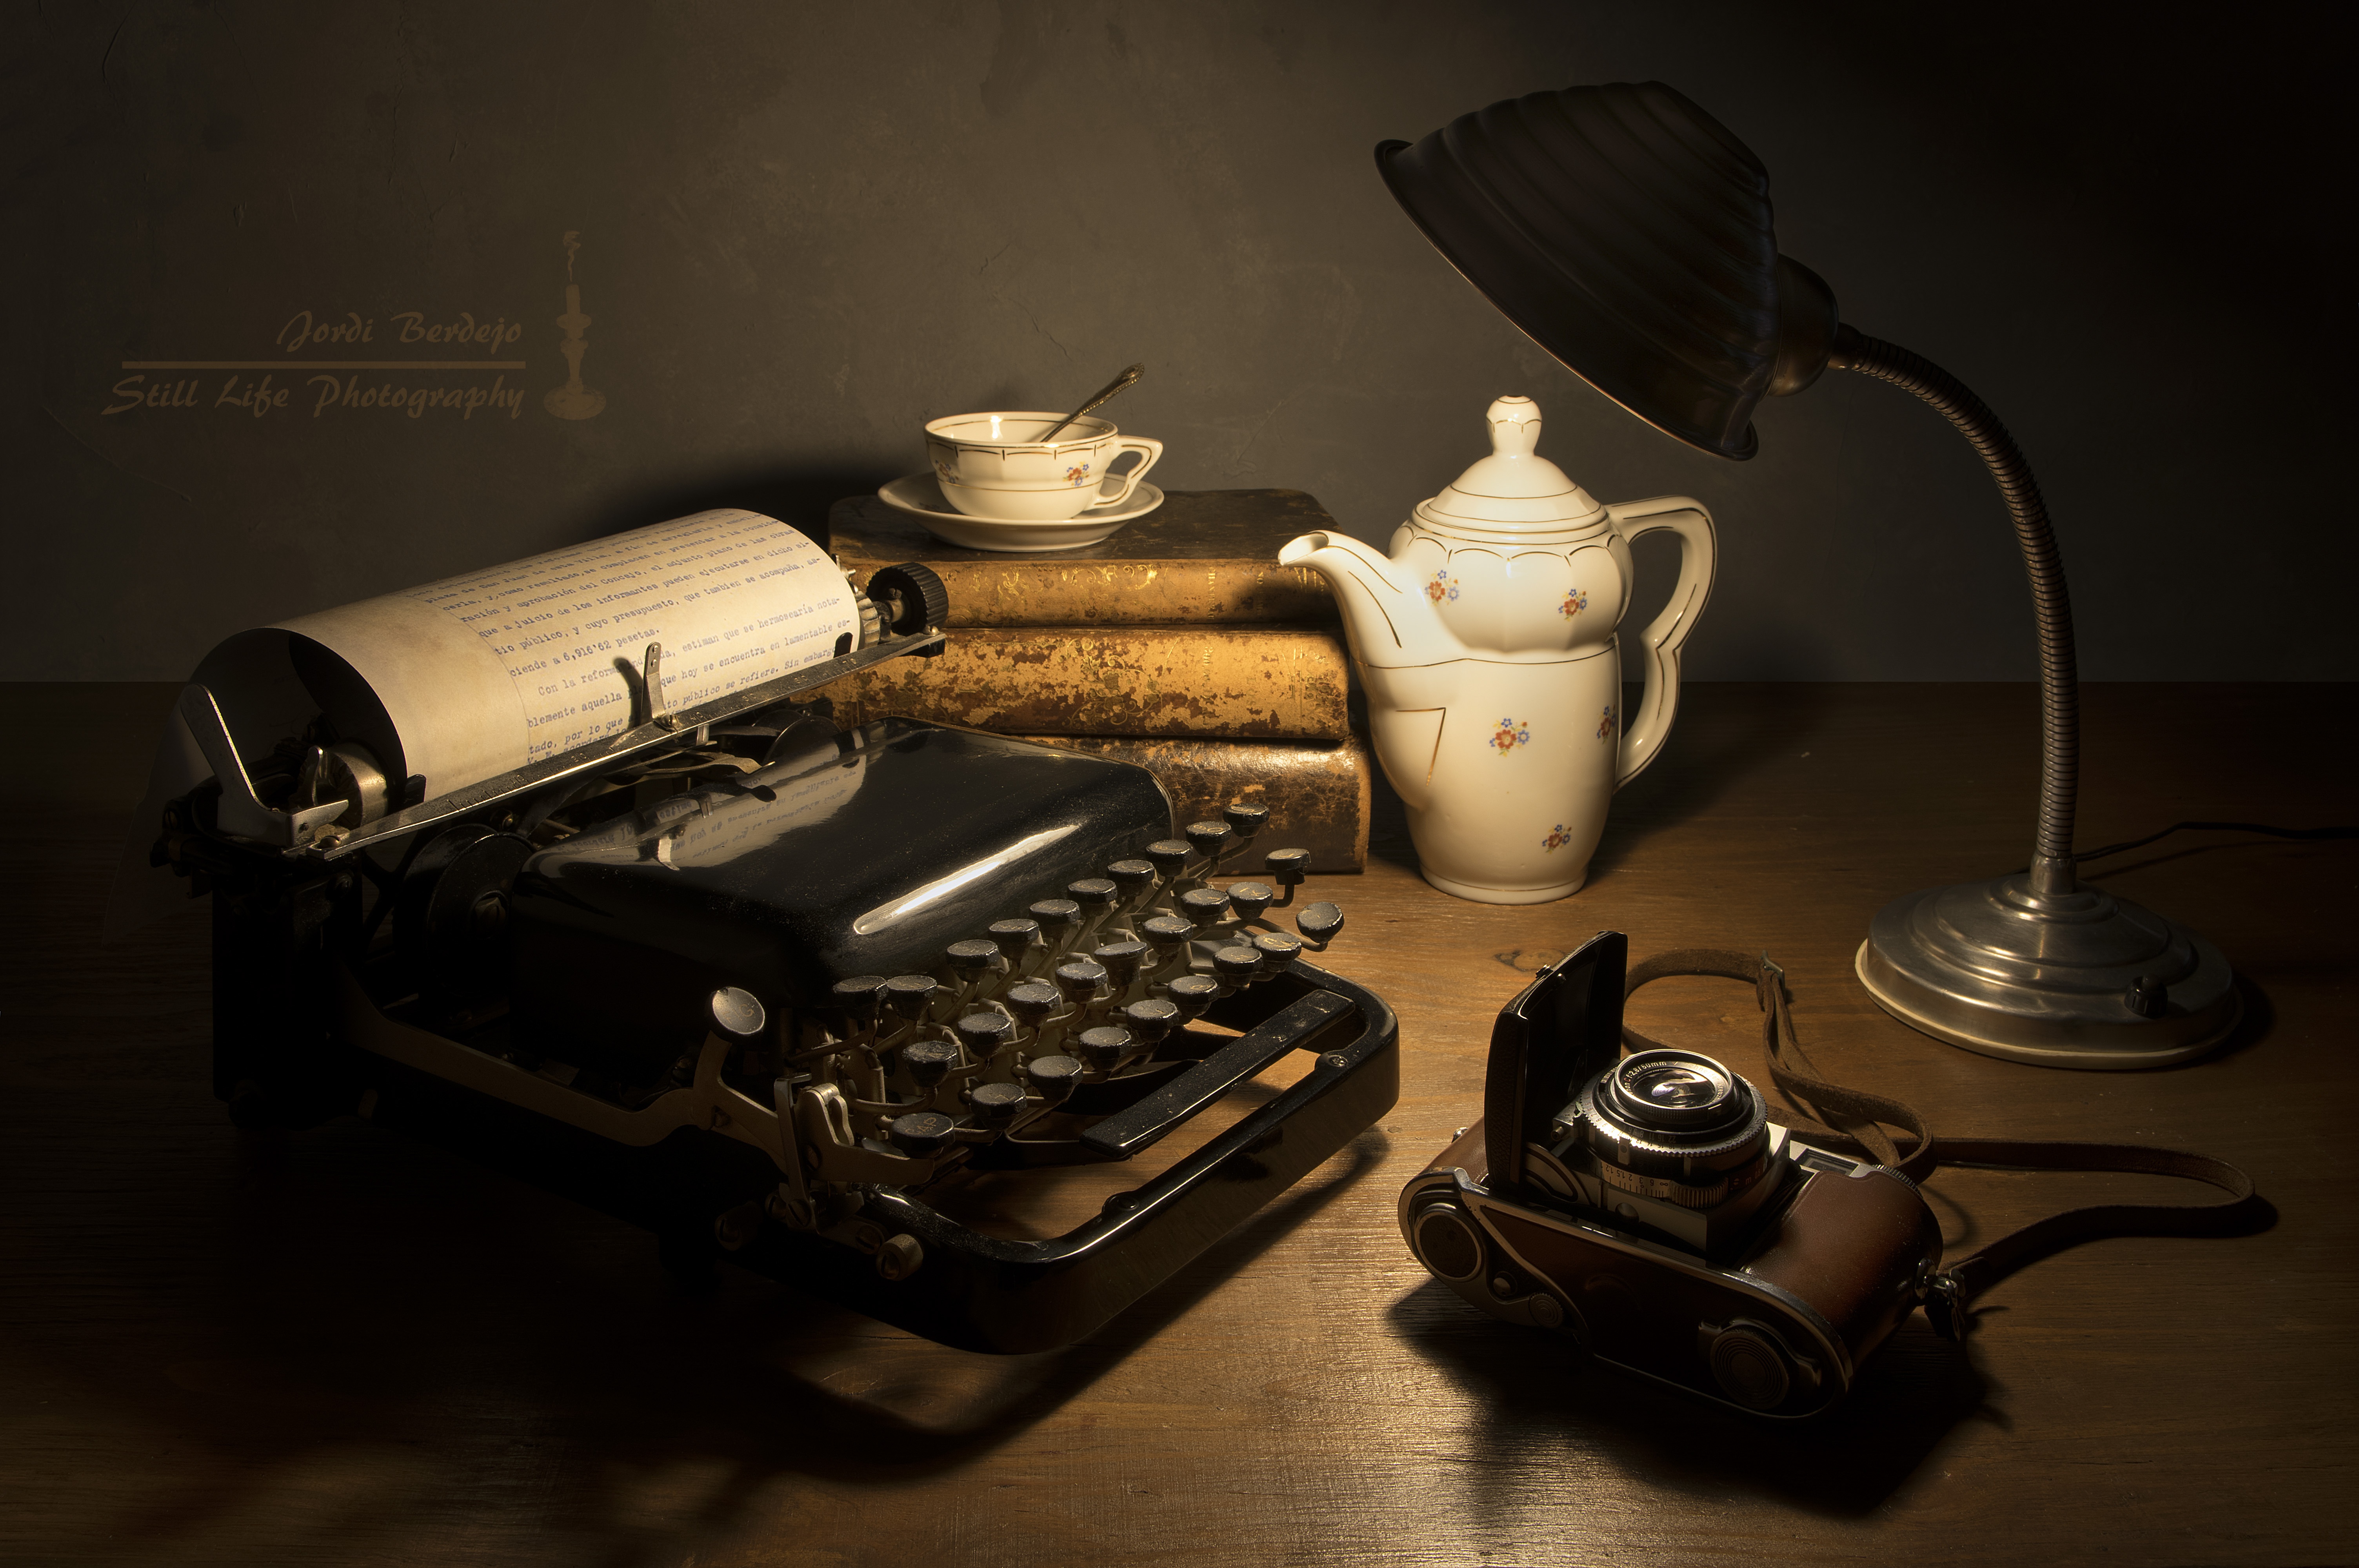 typewriter, photography, still life, camera, cup, lamp, teapot